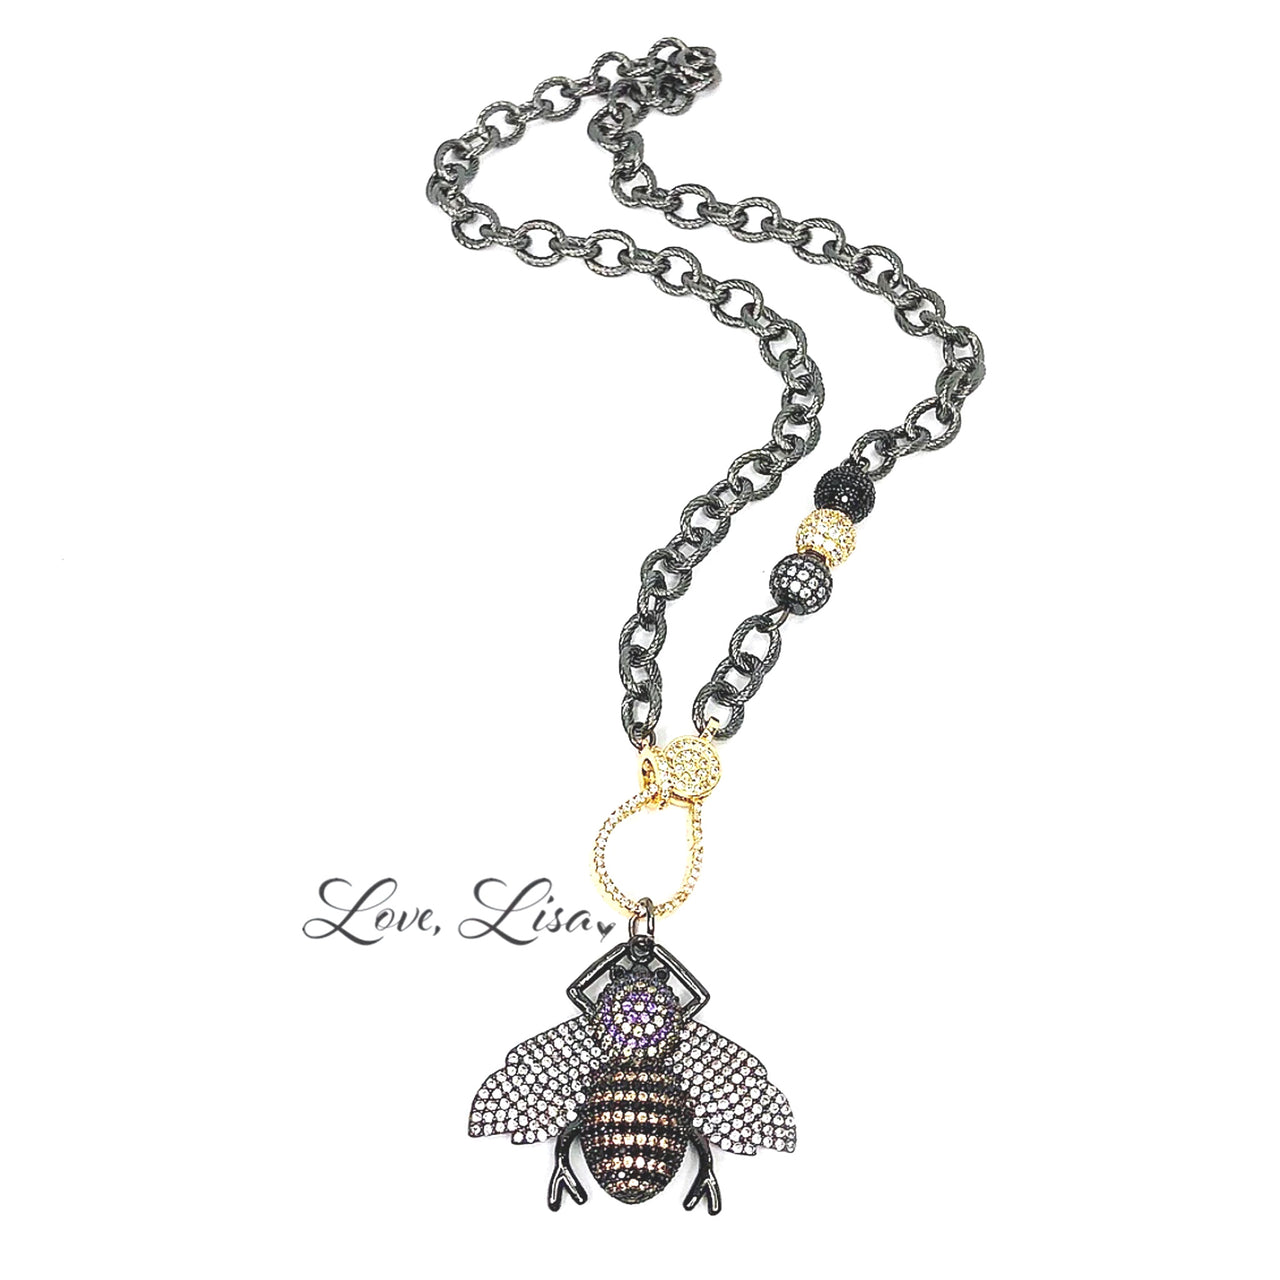 Tina’s Queen Bee Necklace